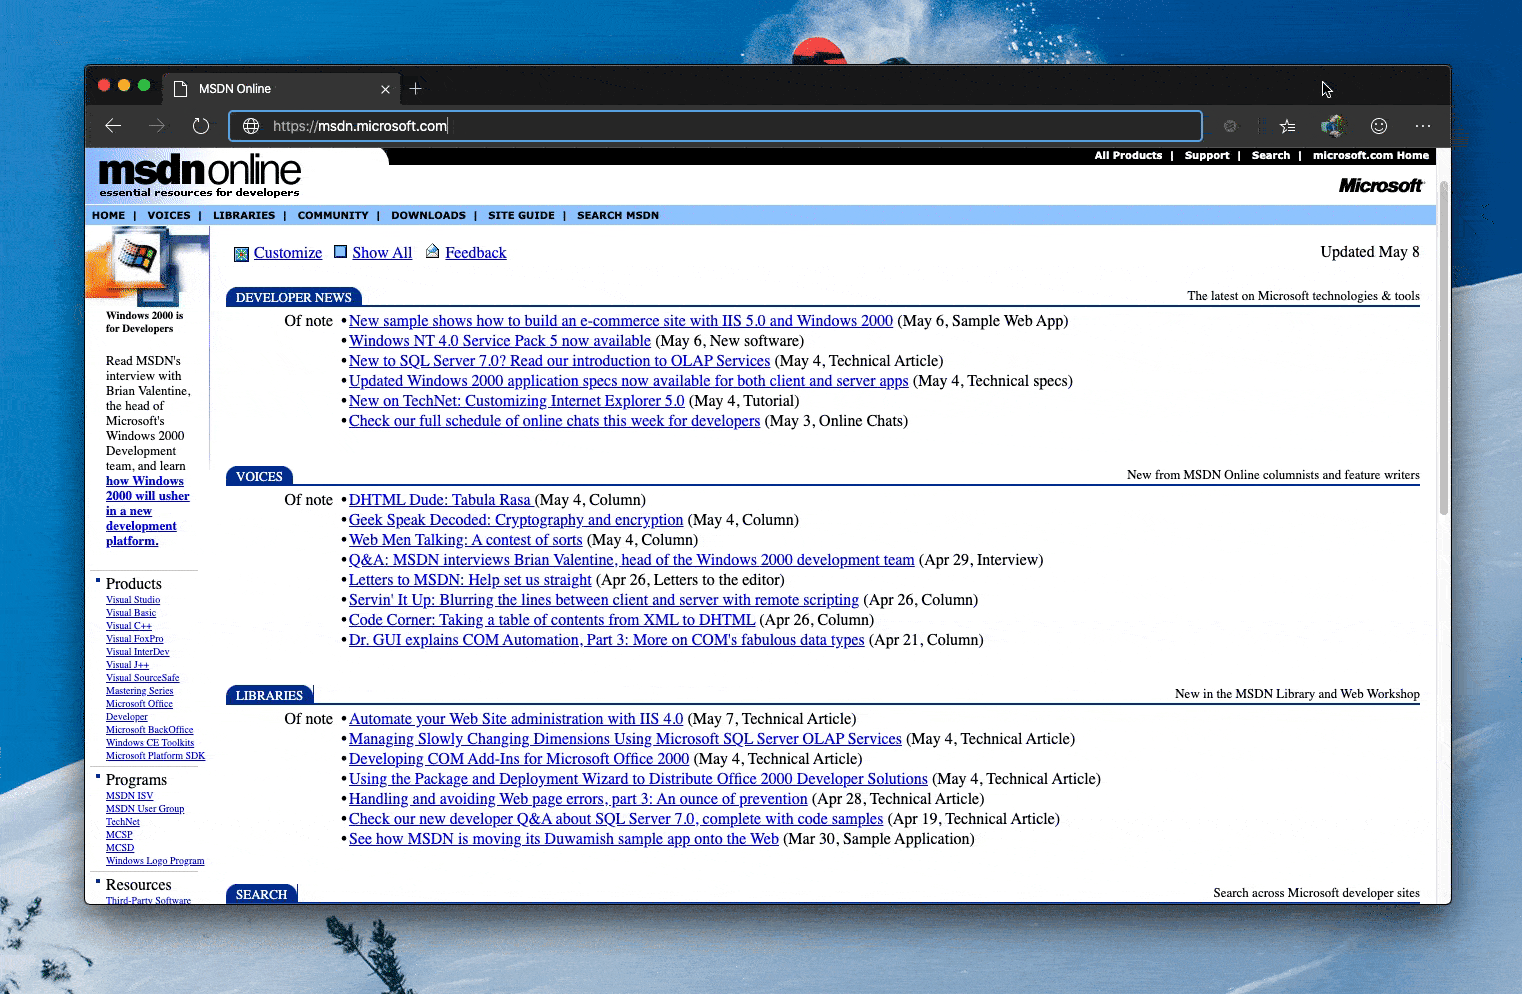 Captura de ecrã a mostrar o MSDN Online em 1999